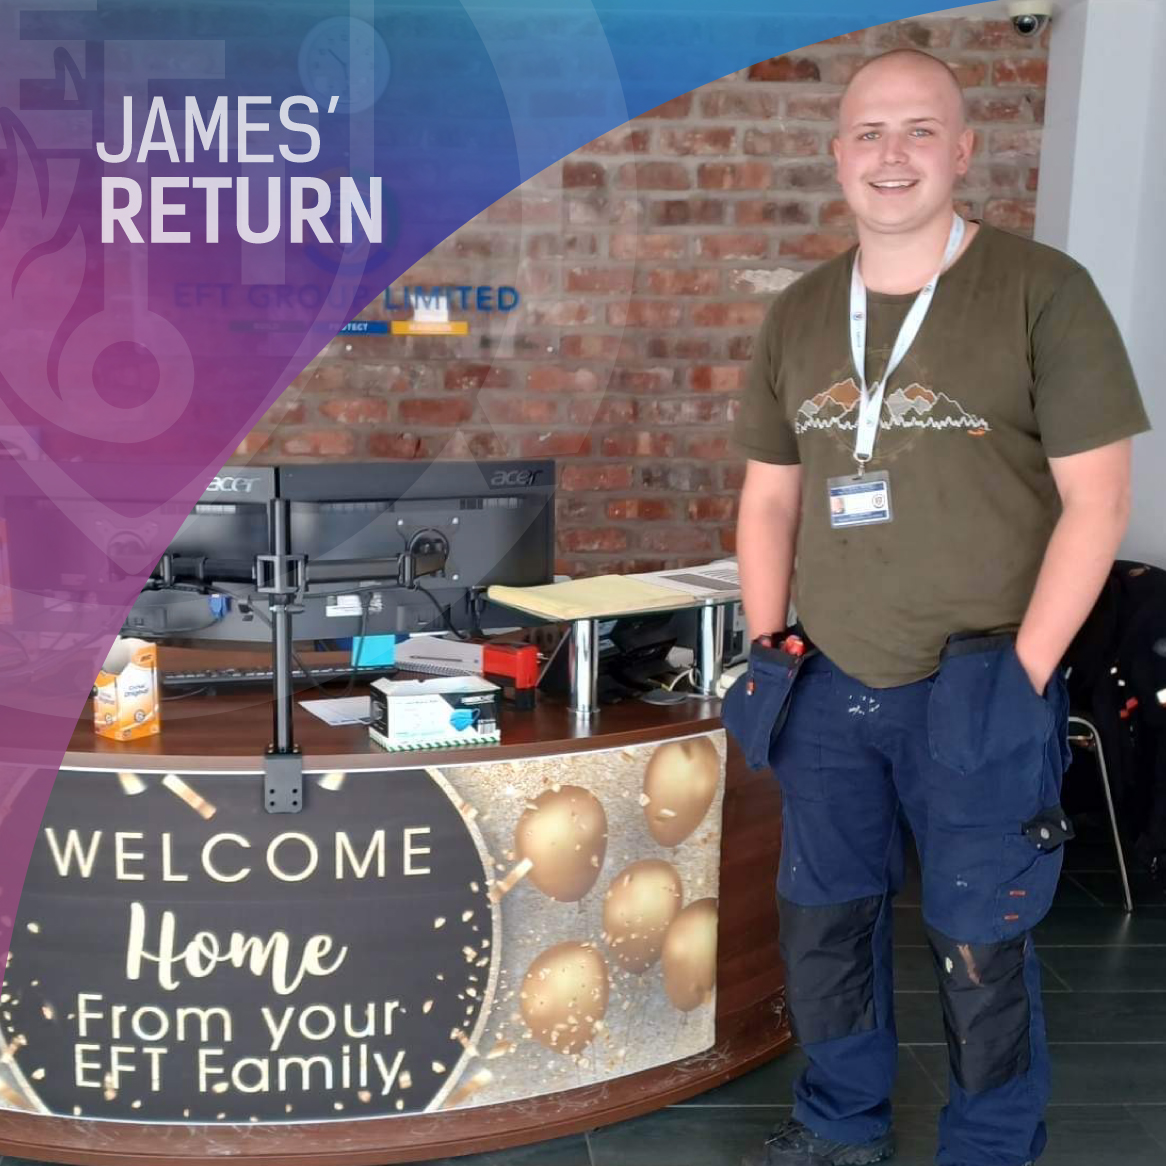 James’ return